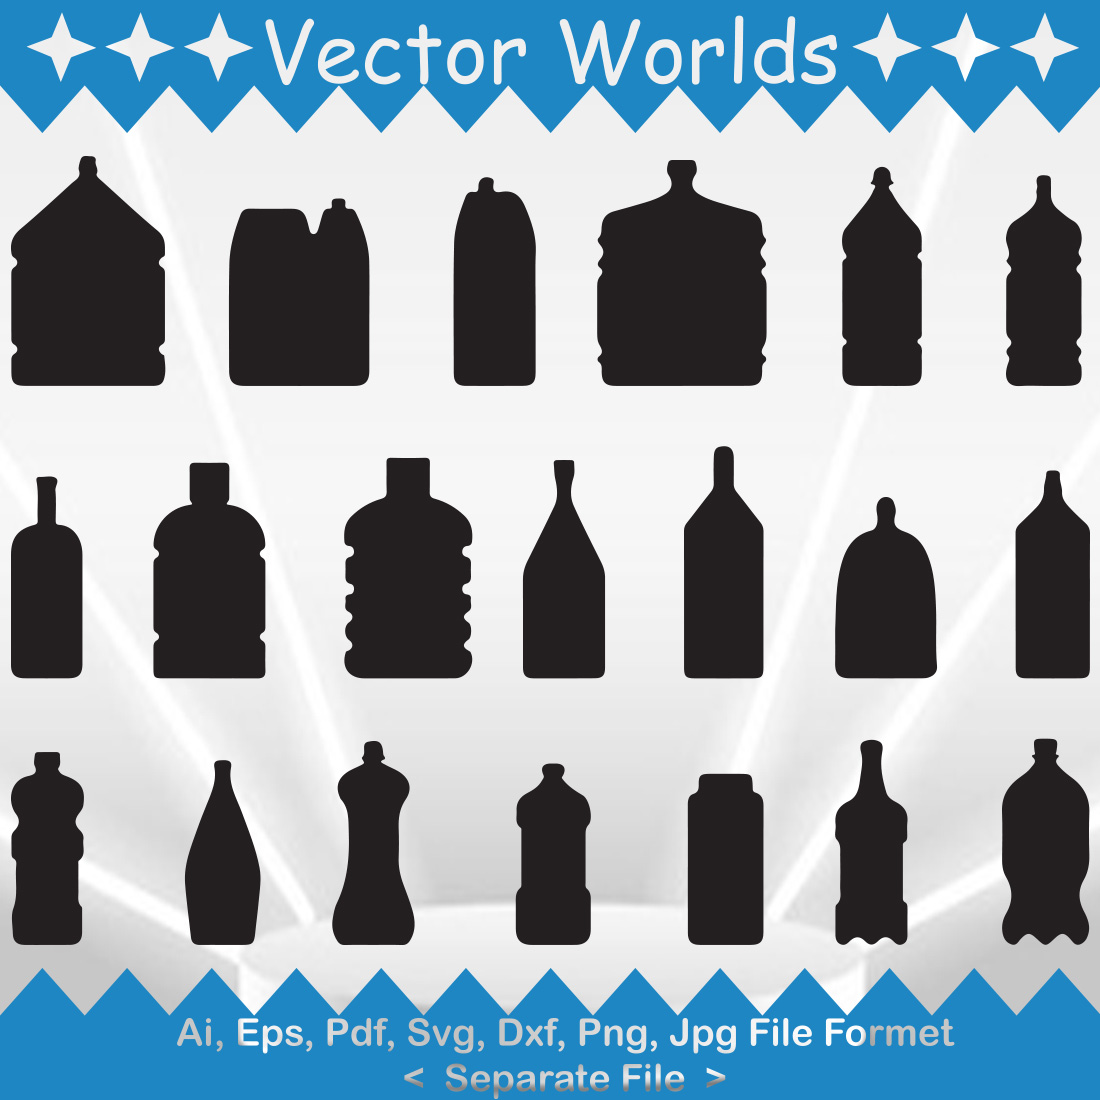 Plastic Bottle SVG Vector Design cover image.